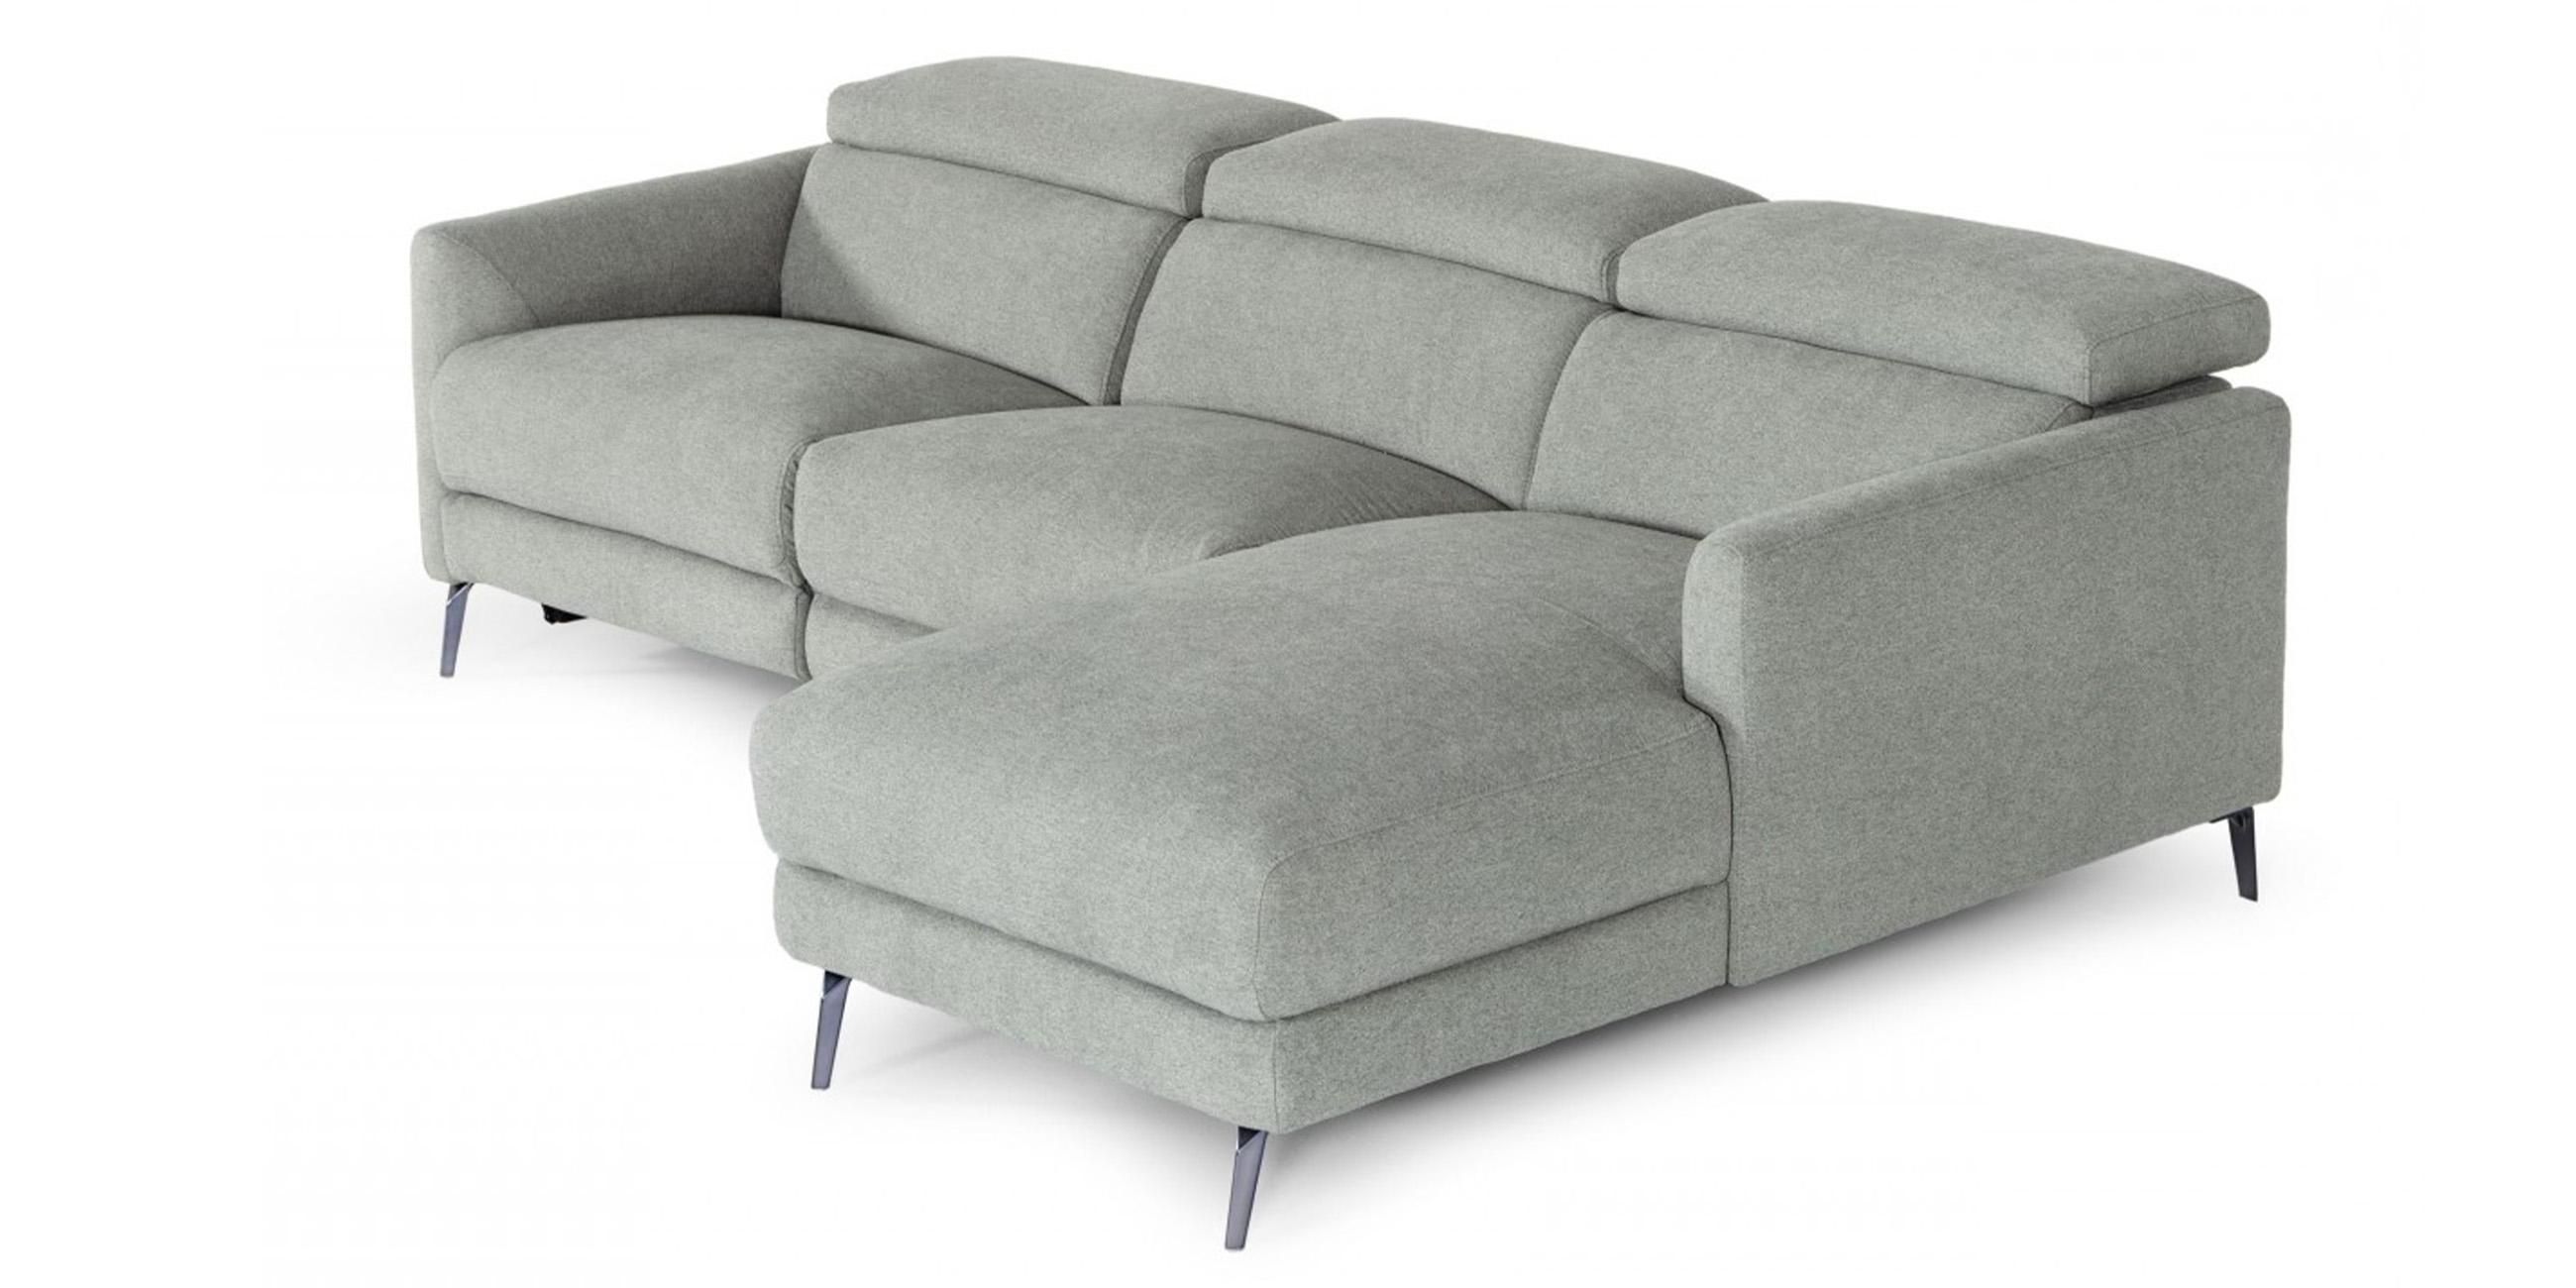 Contemporary, Modern Sectional Sofa VGKMKM.5000-RF VGKMKM.5000-RF in Gray Fabric